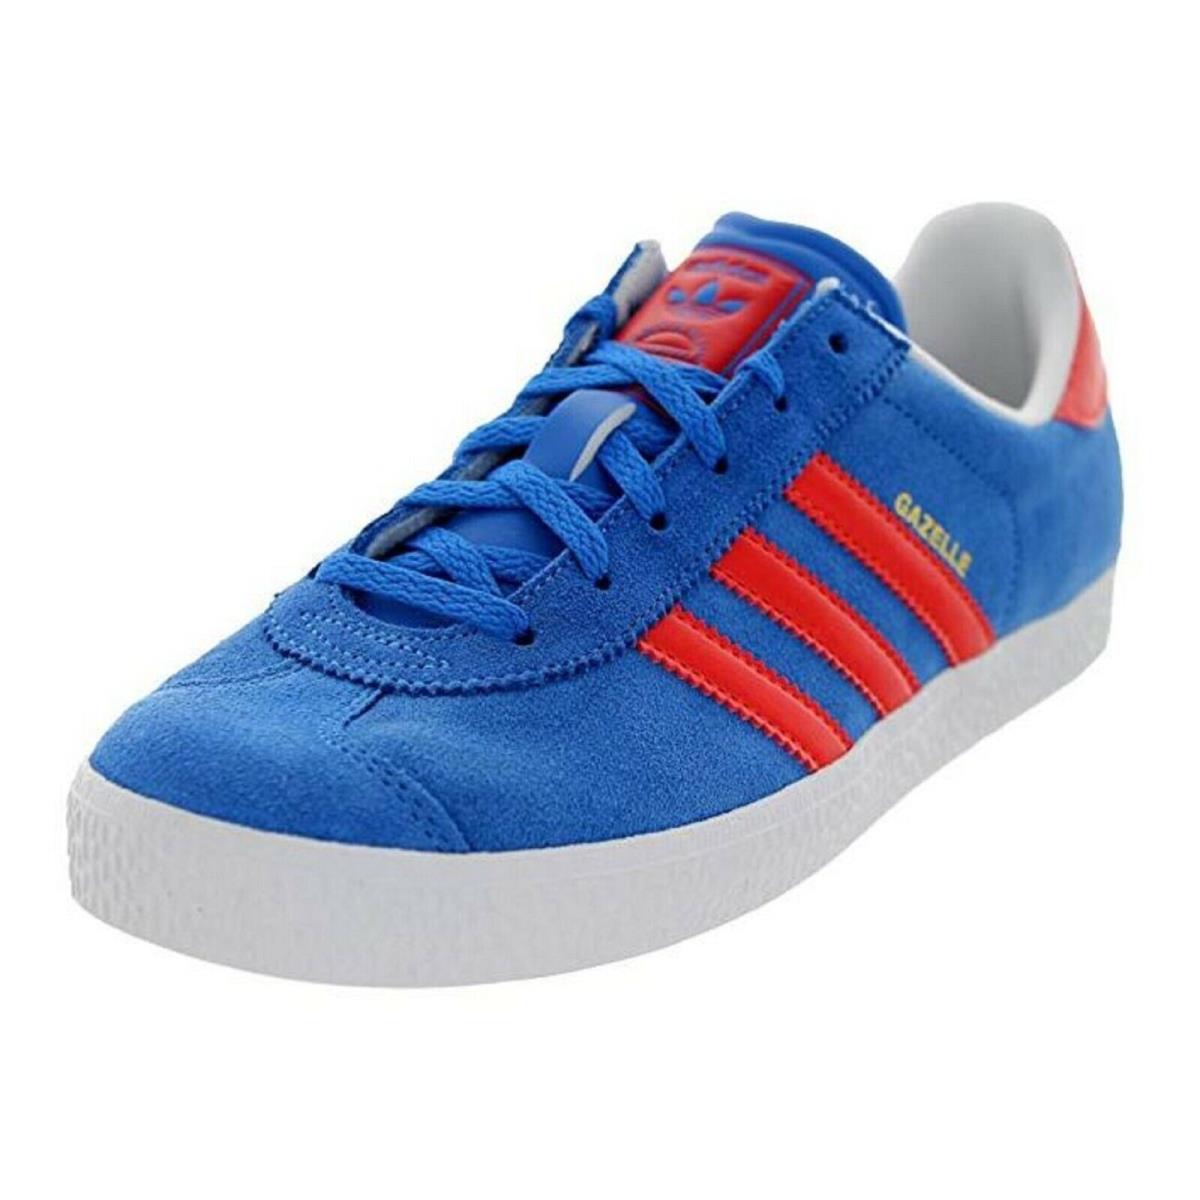 Adidas Big Kid Gazelle 2 J Suede Shoe Blue / Red / White G95464 ...